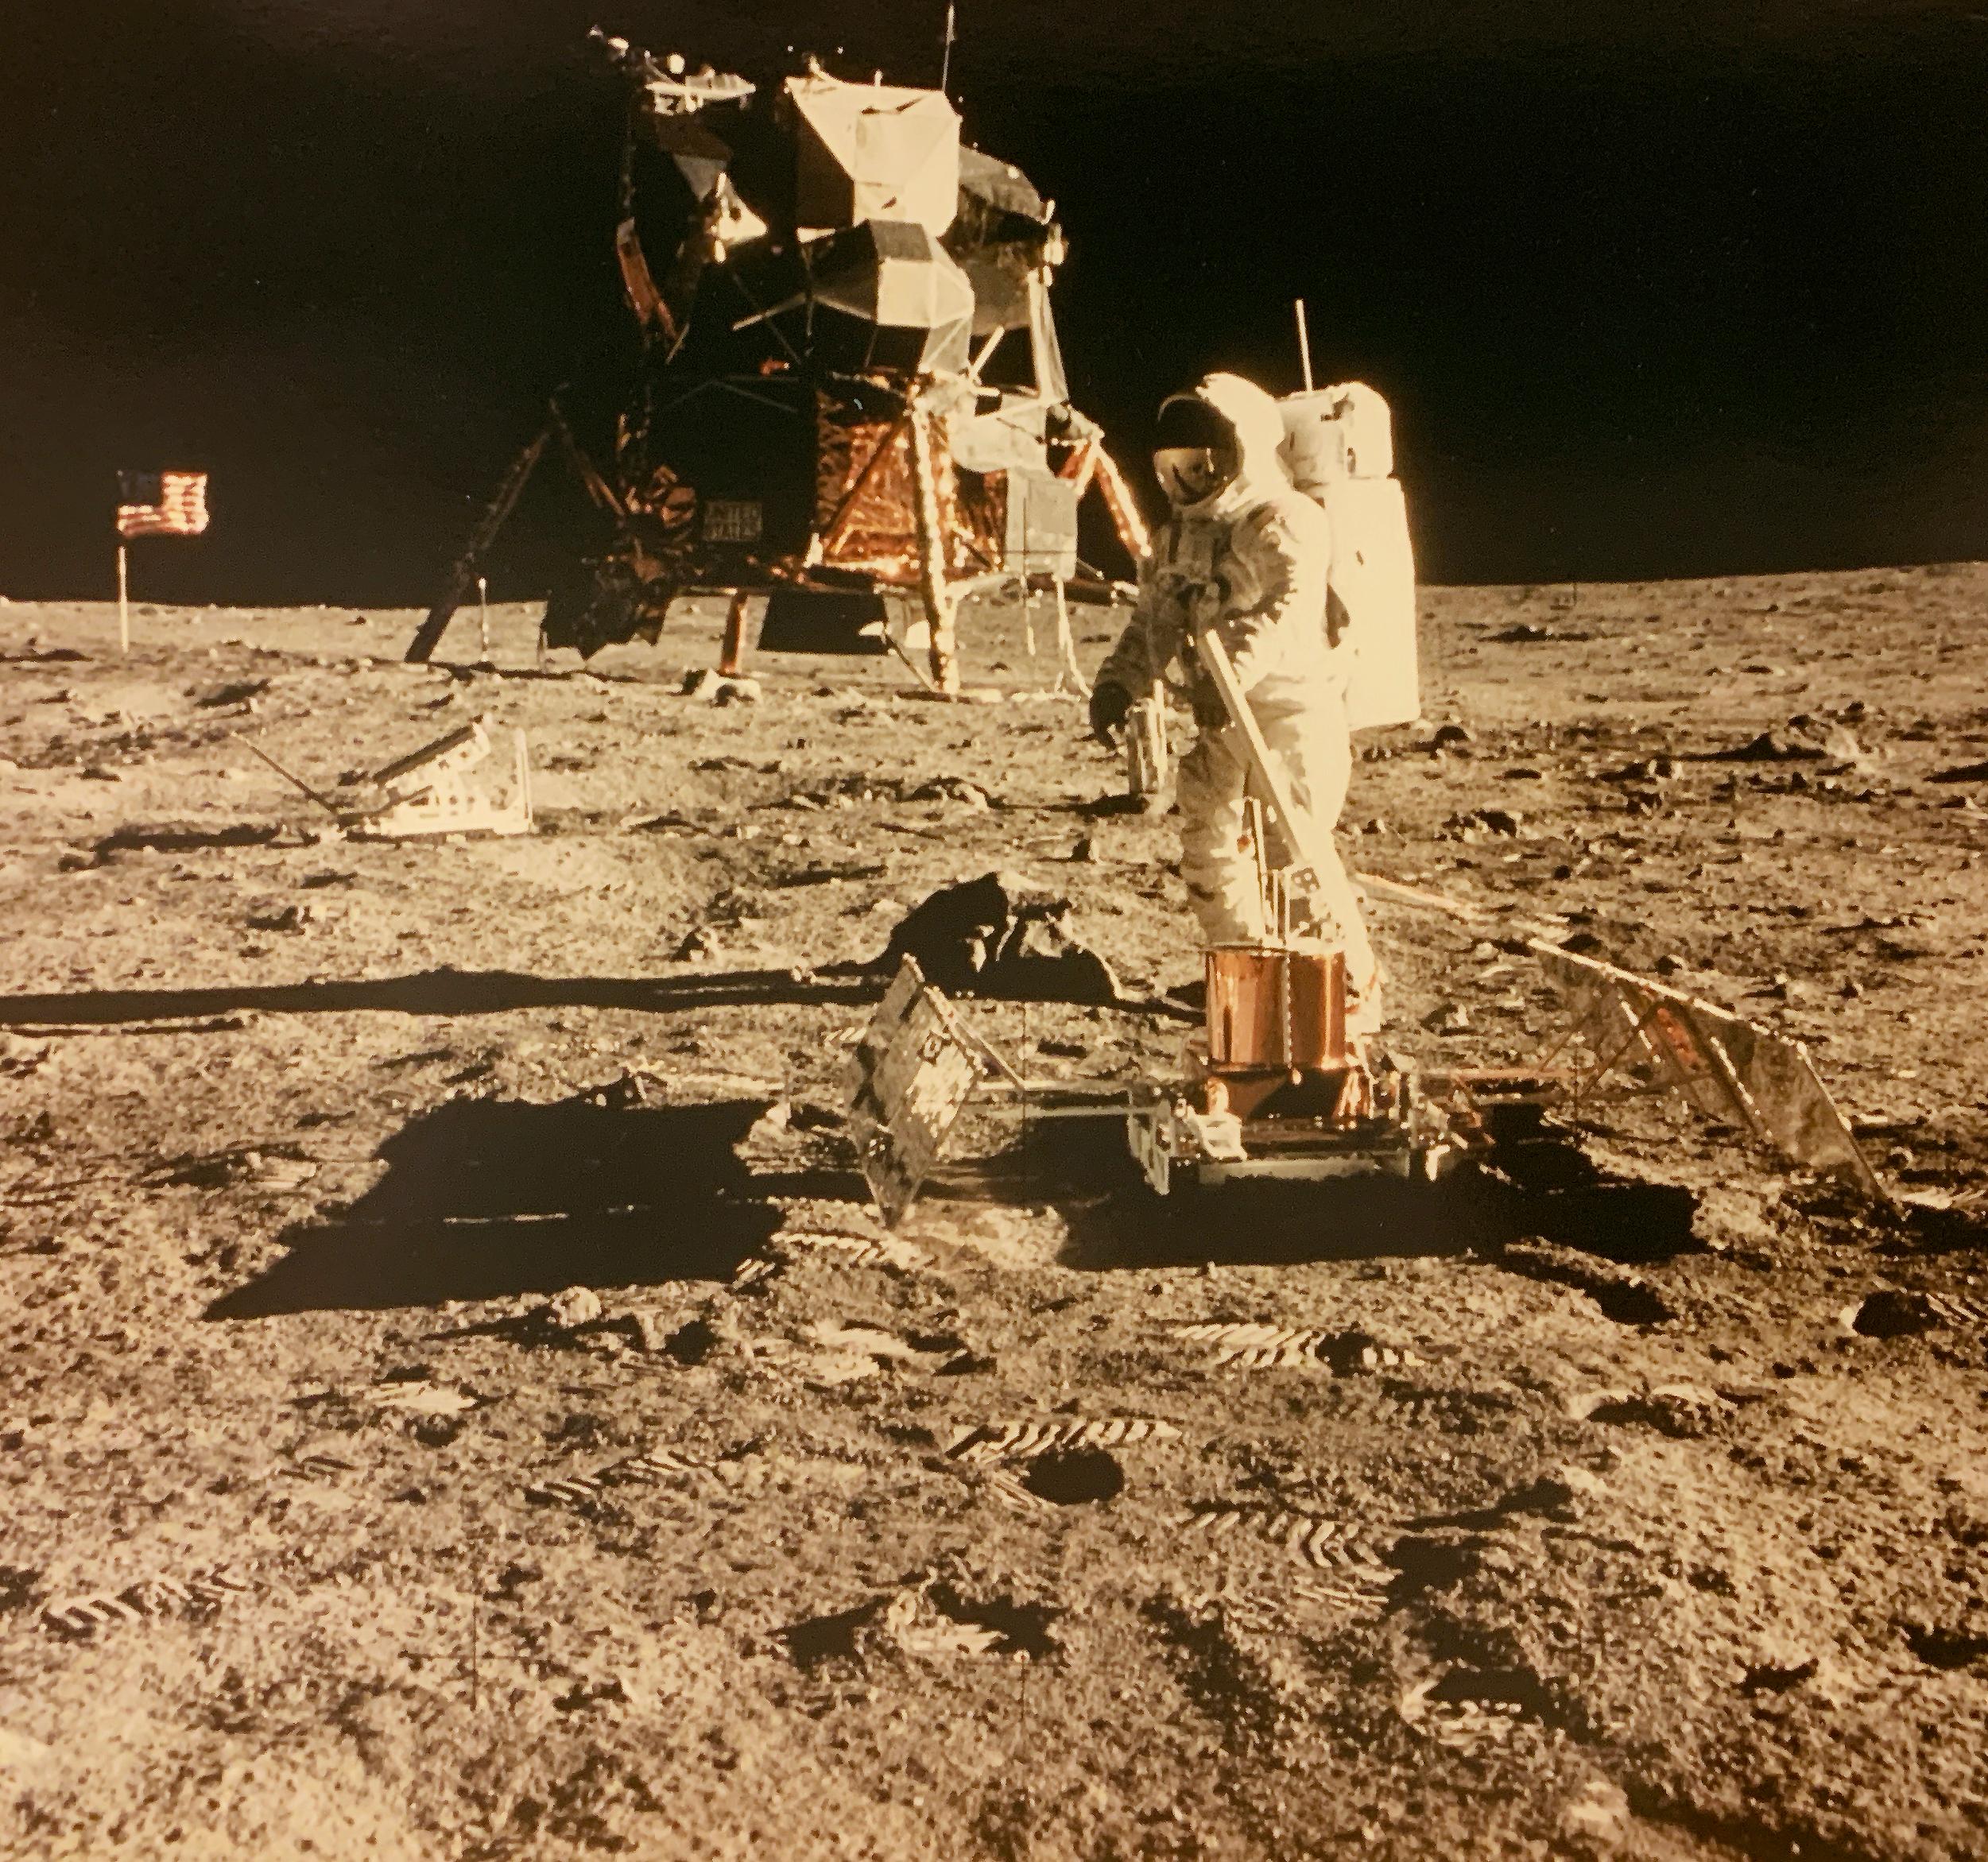 16 x 20 Photo of Apollo 11 Astronaut Buzz Aldrin Conducting Experiments on Moon - Photograph by NASA